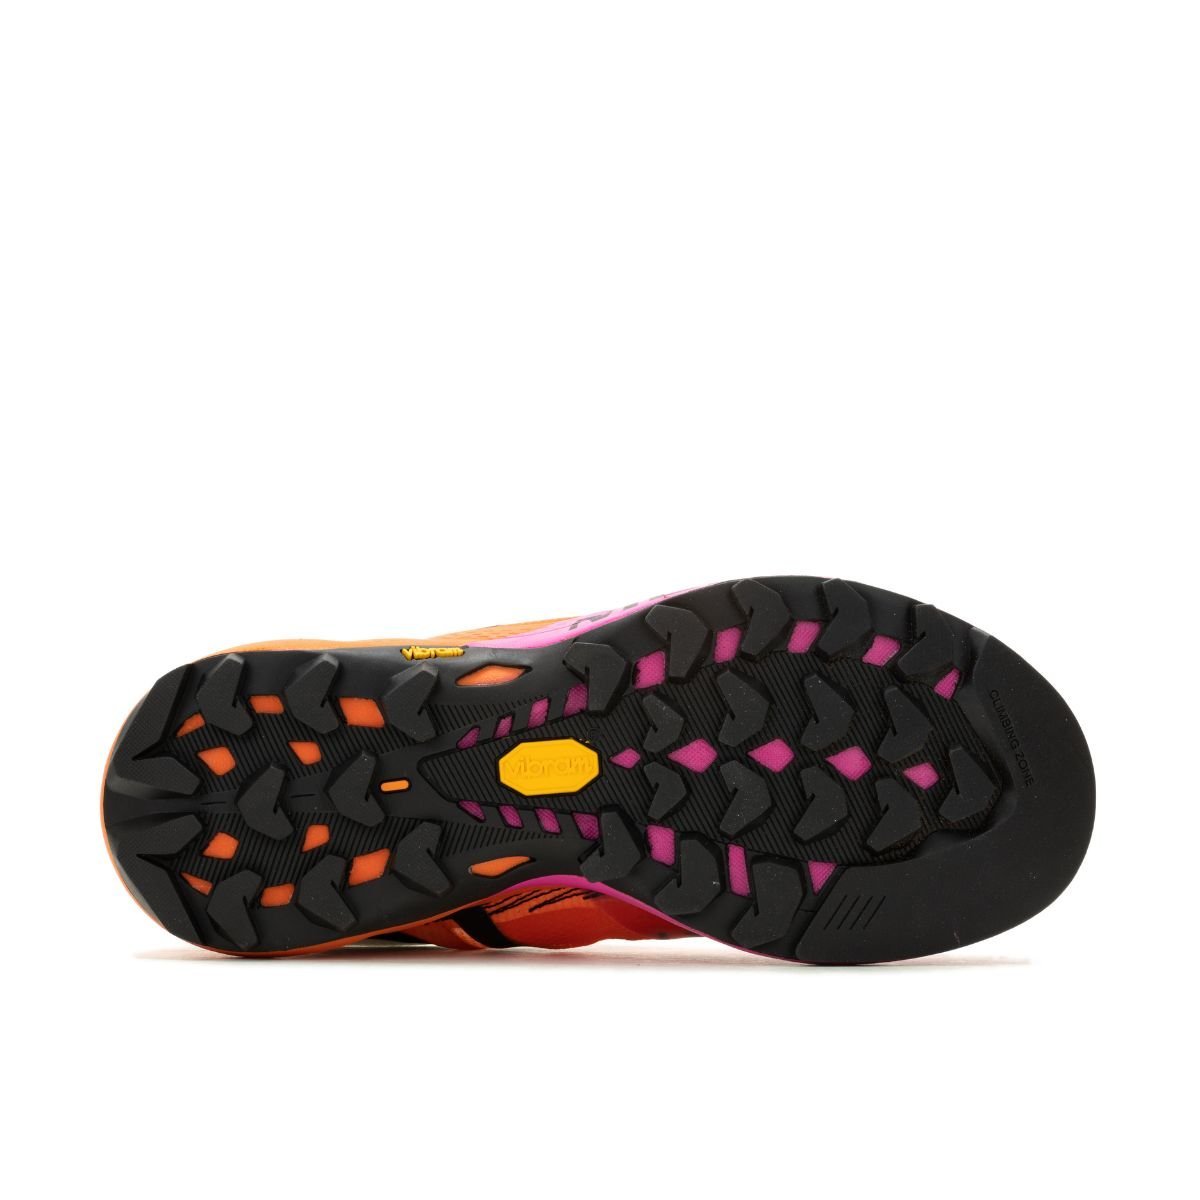 Topánky Merrell J038048 MTL MQM W - oranžová